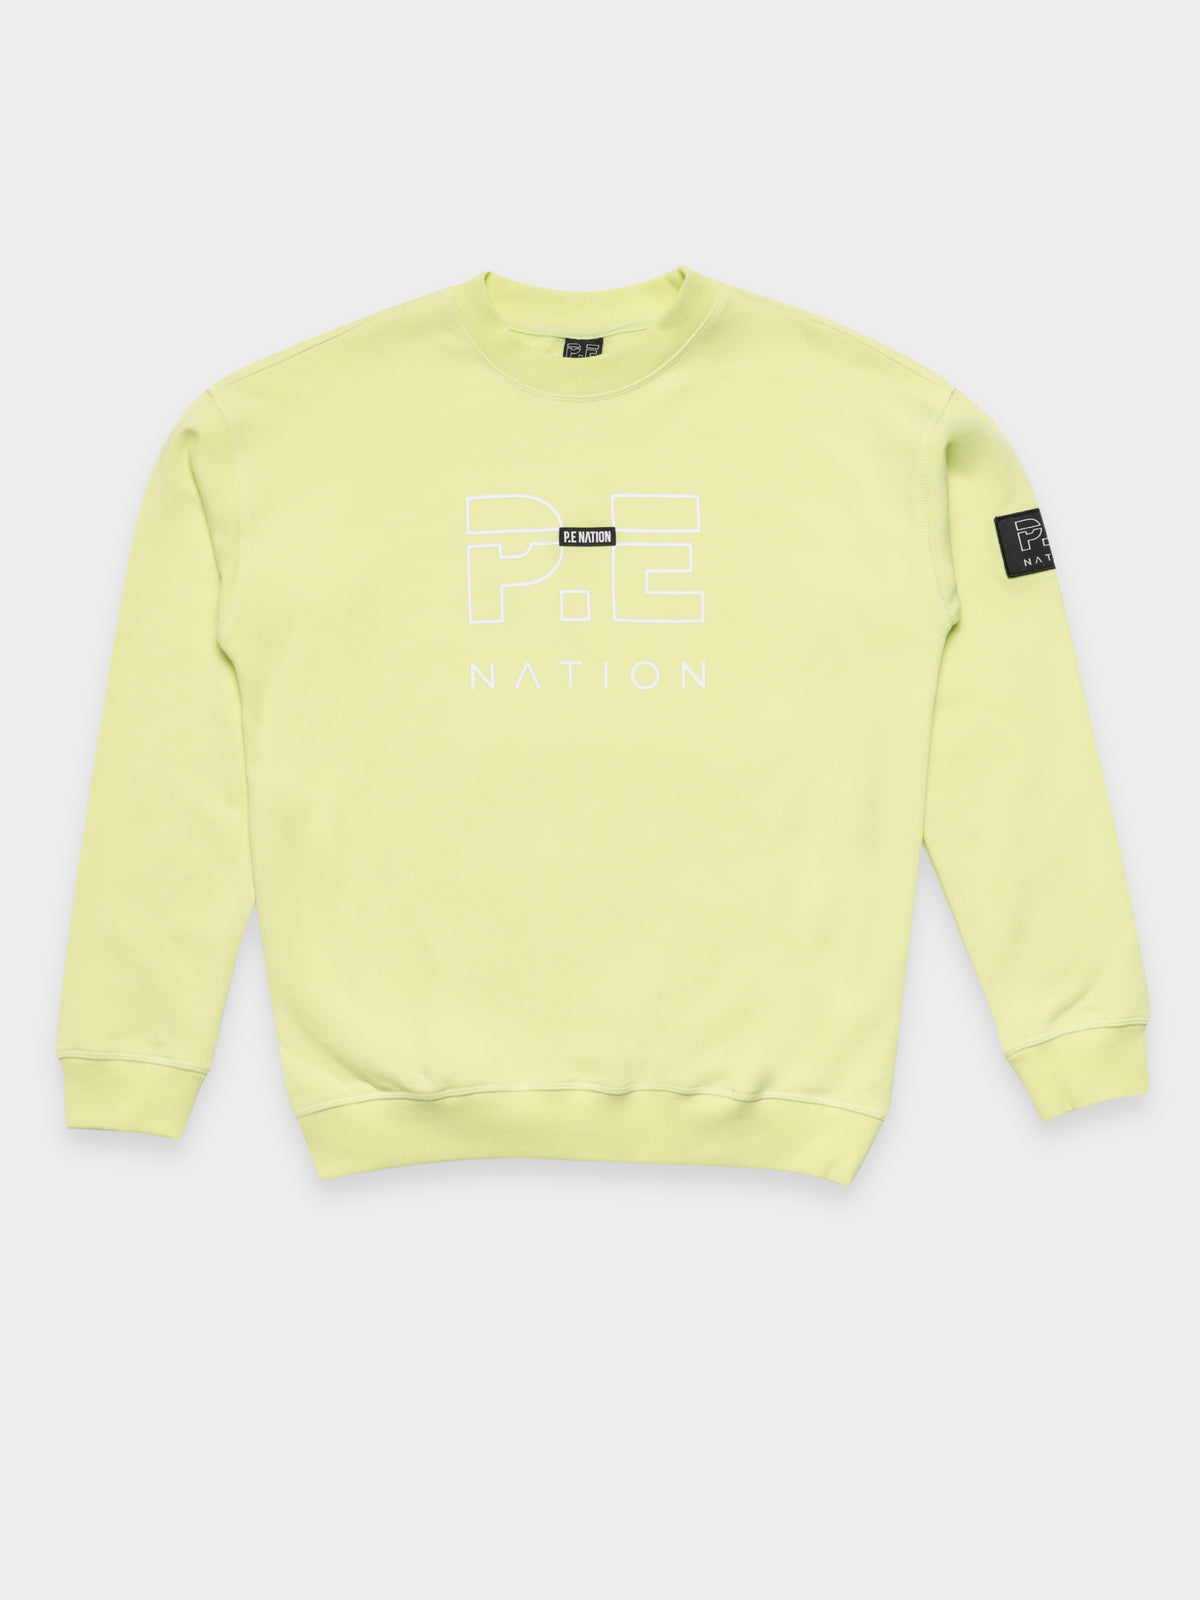 Heads Up Sweatshirt in Yellow